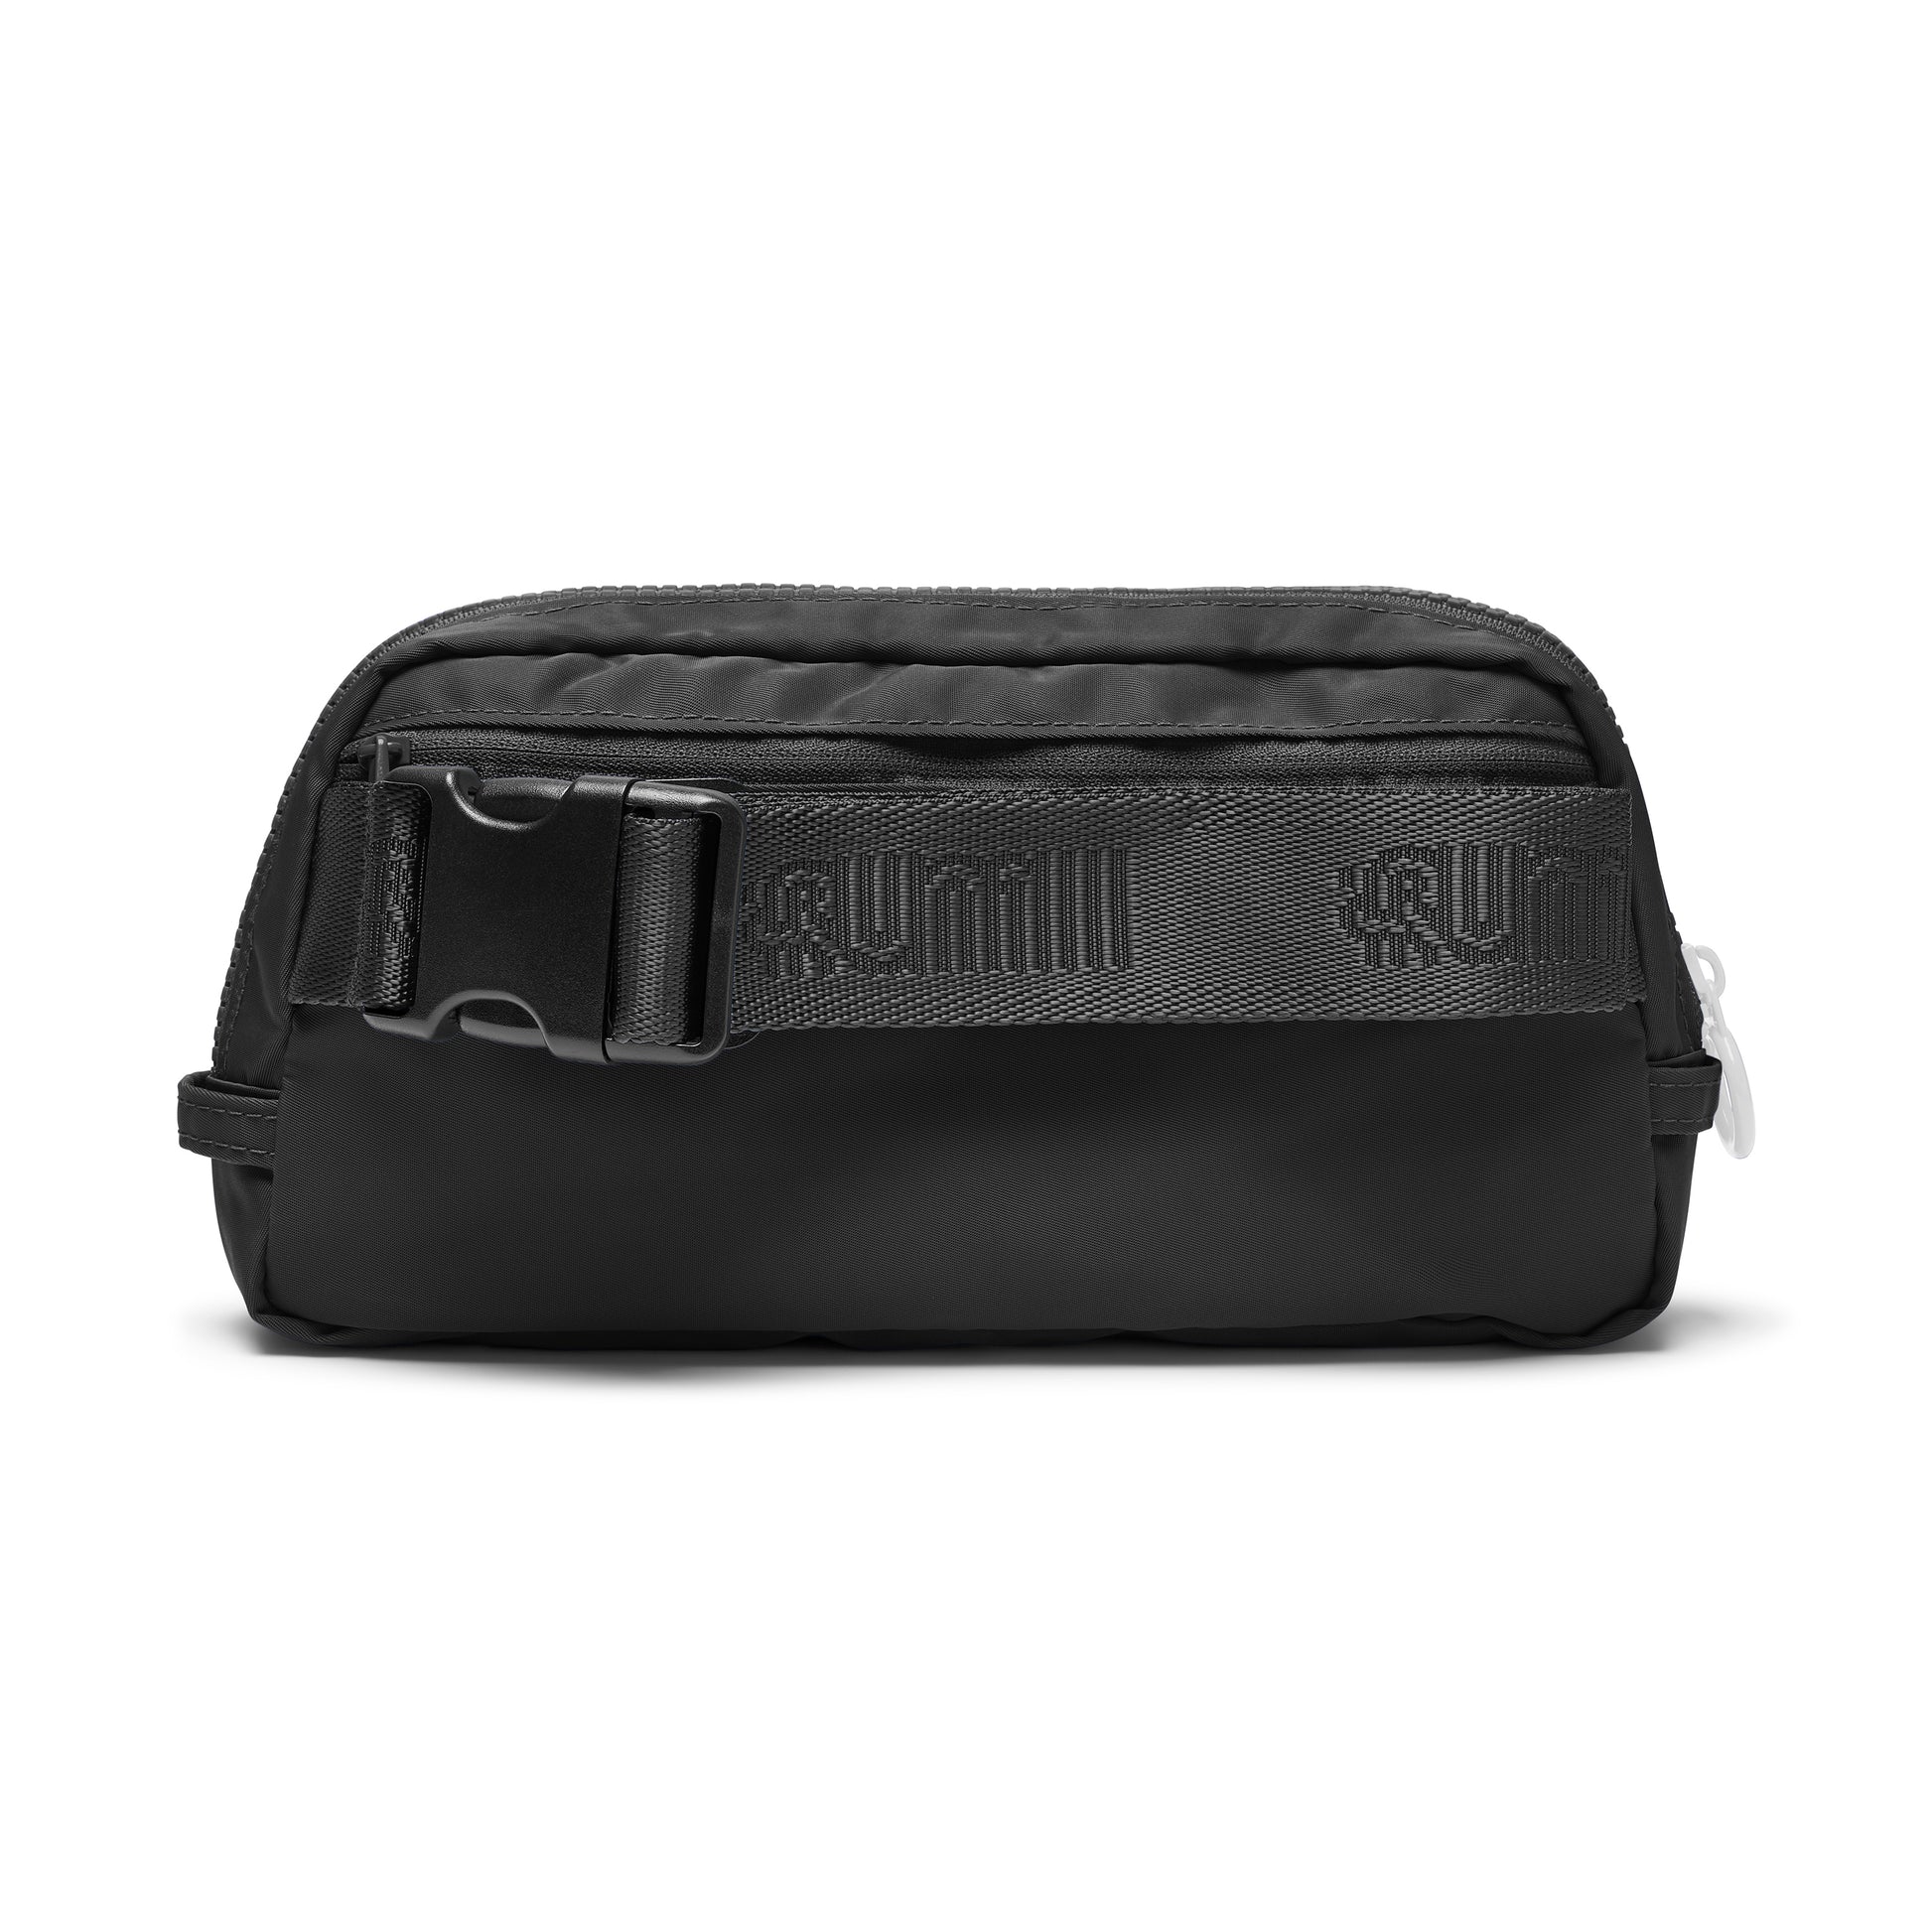 Black Rumii Essential Bag for nurses